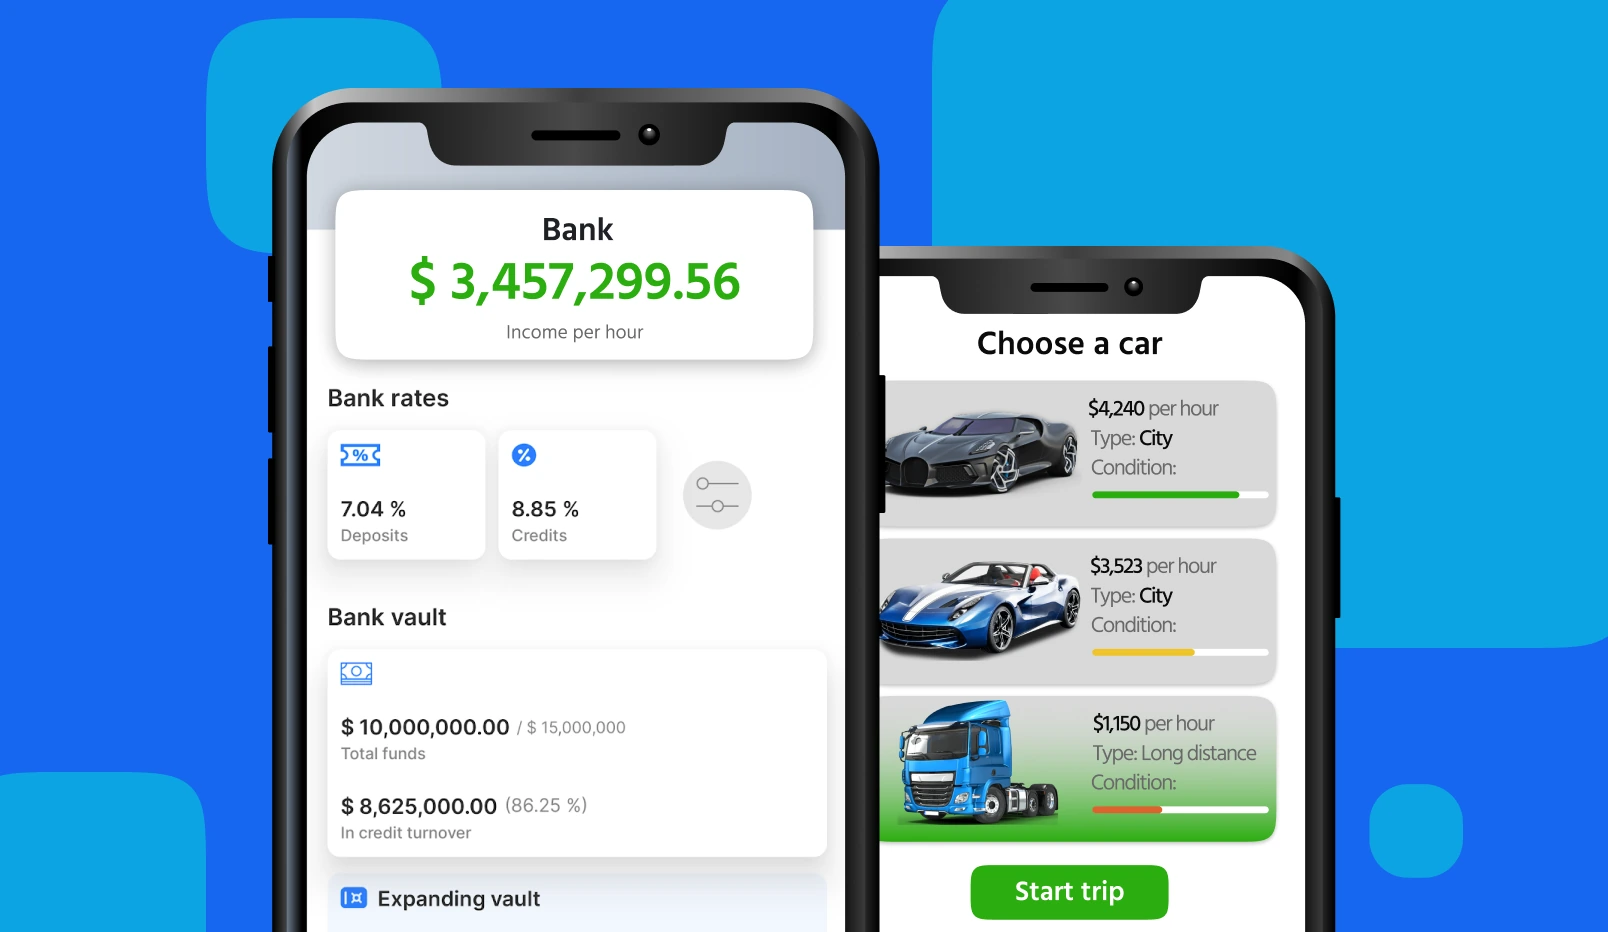 Bank / Choose Car